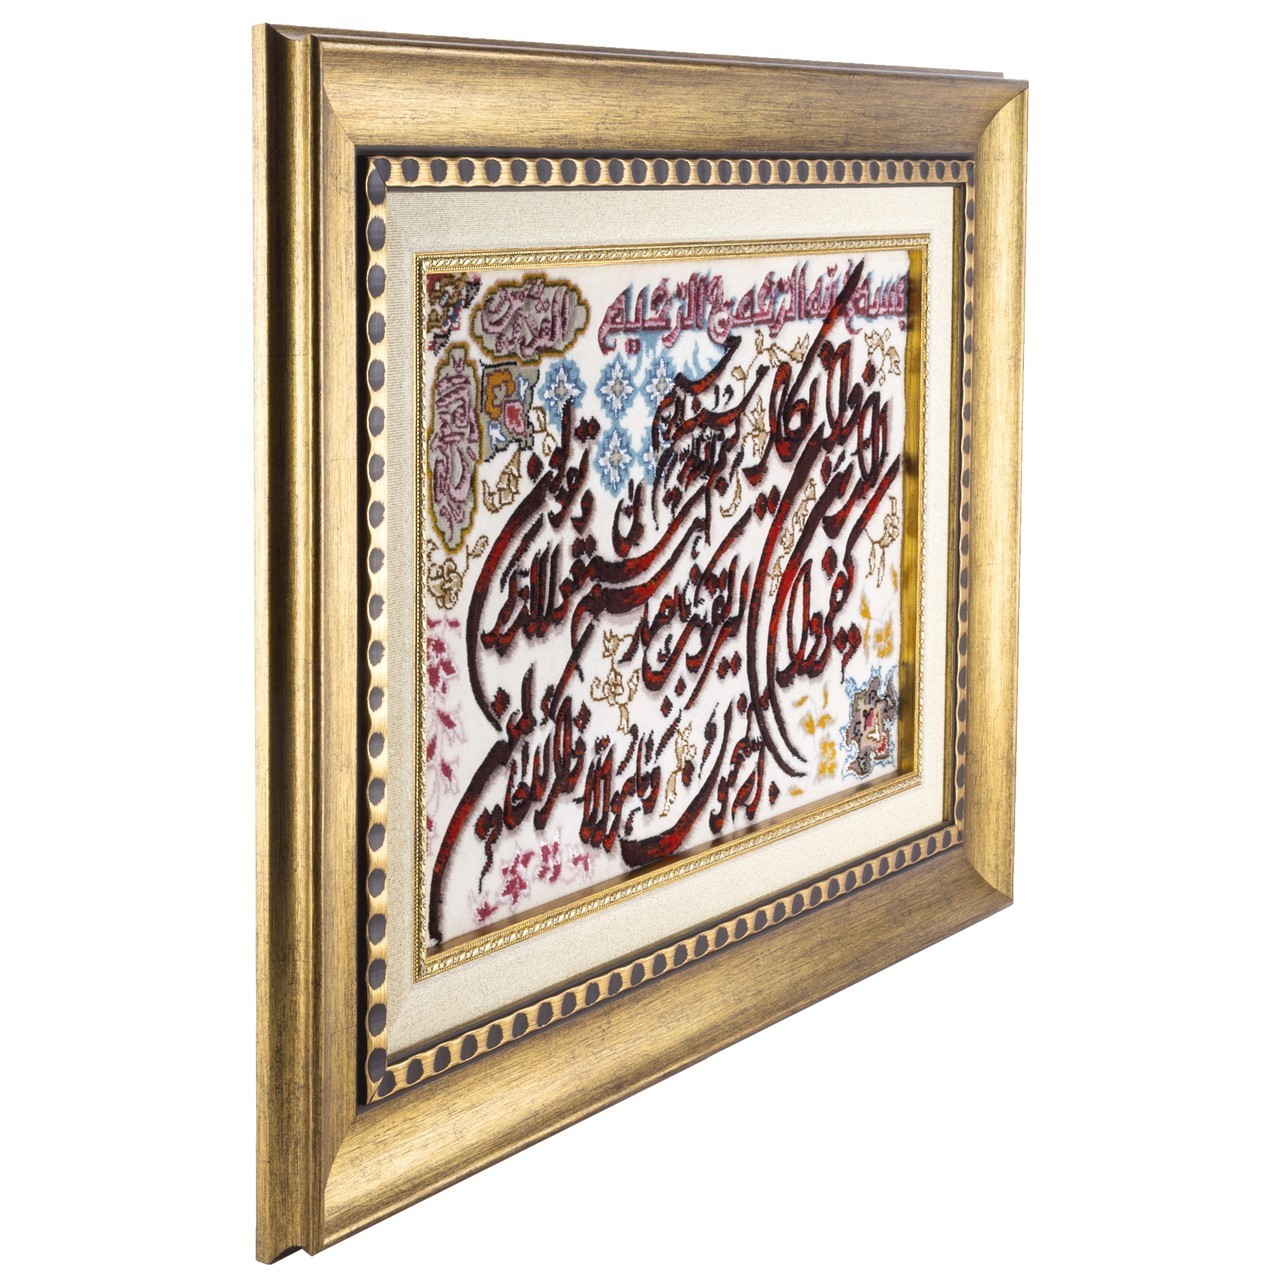 Pictorial Tabriz Carpet Ref : 901285